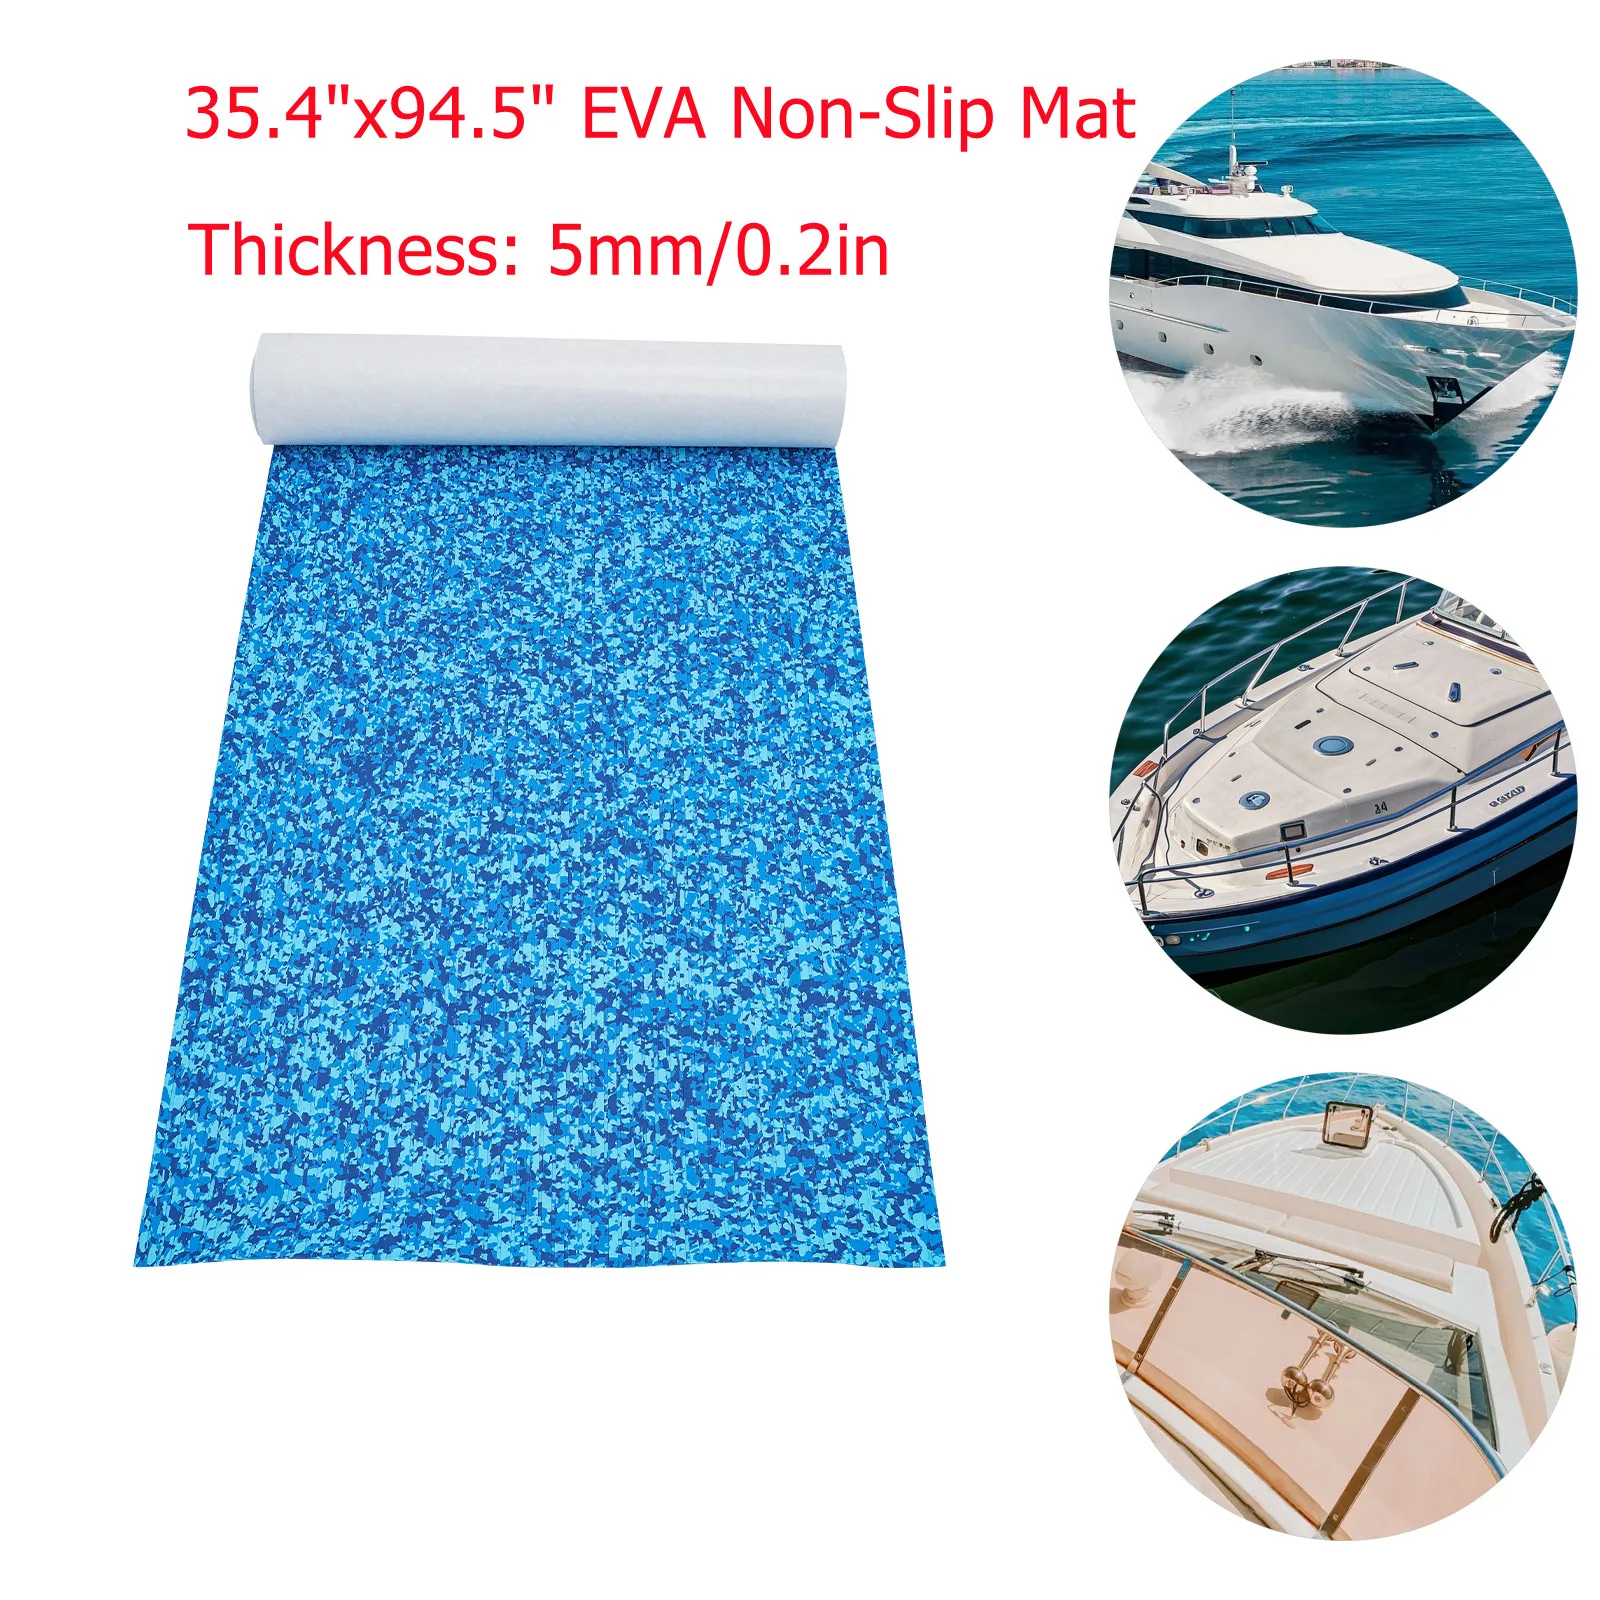 

EVA Non-Slip Mat, 35.4"x94.5" Self-Adhesive Imitation Teak Floor Mat, Camouflage Marine Floor Interior Yacht Deck